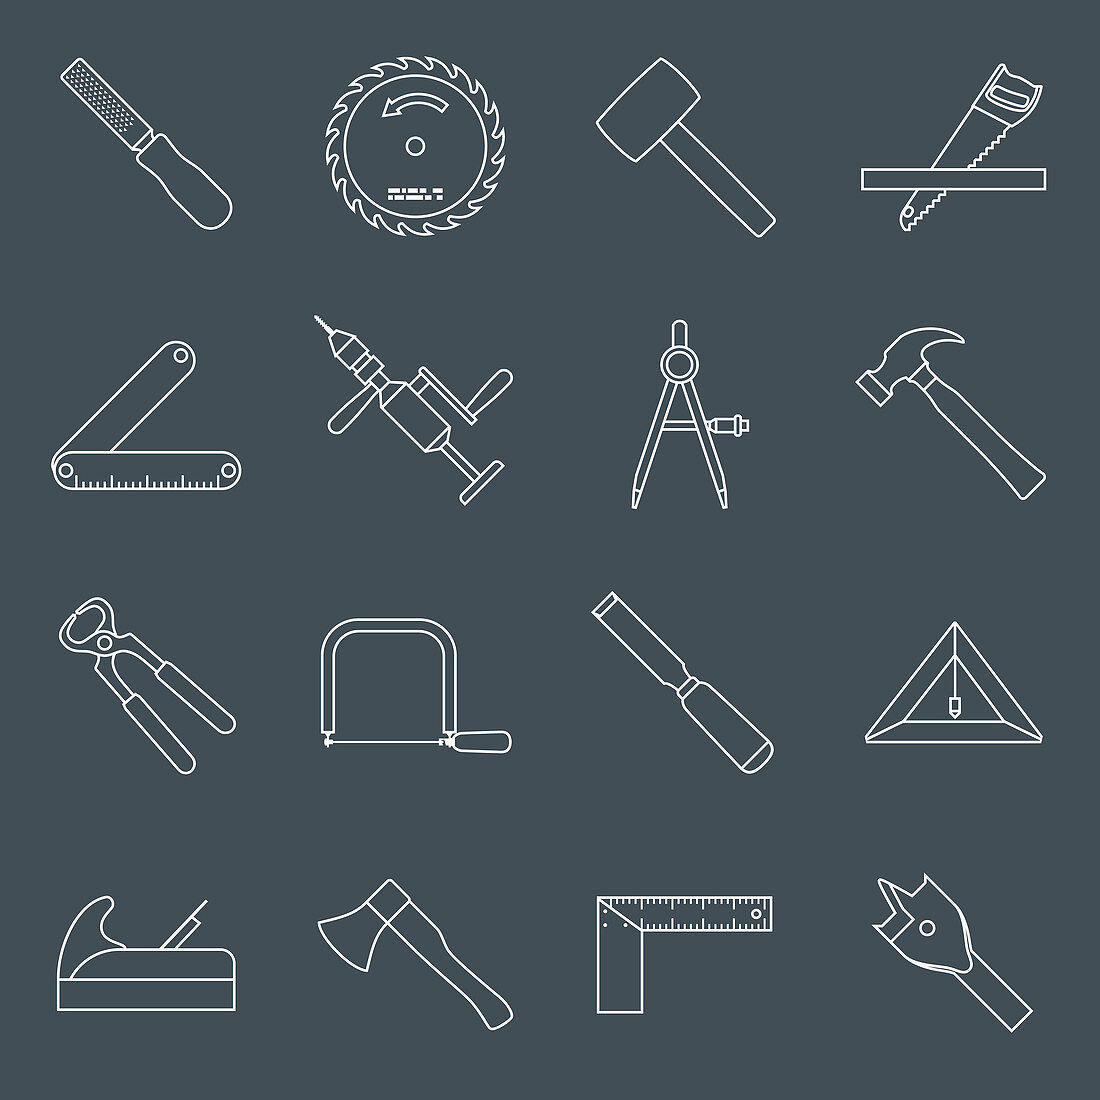 Tool icons, illustration